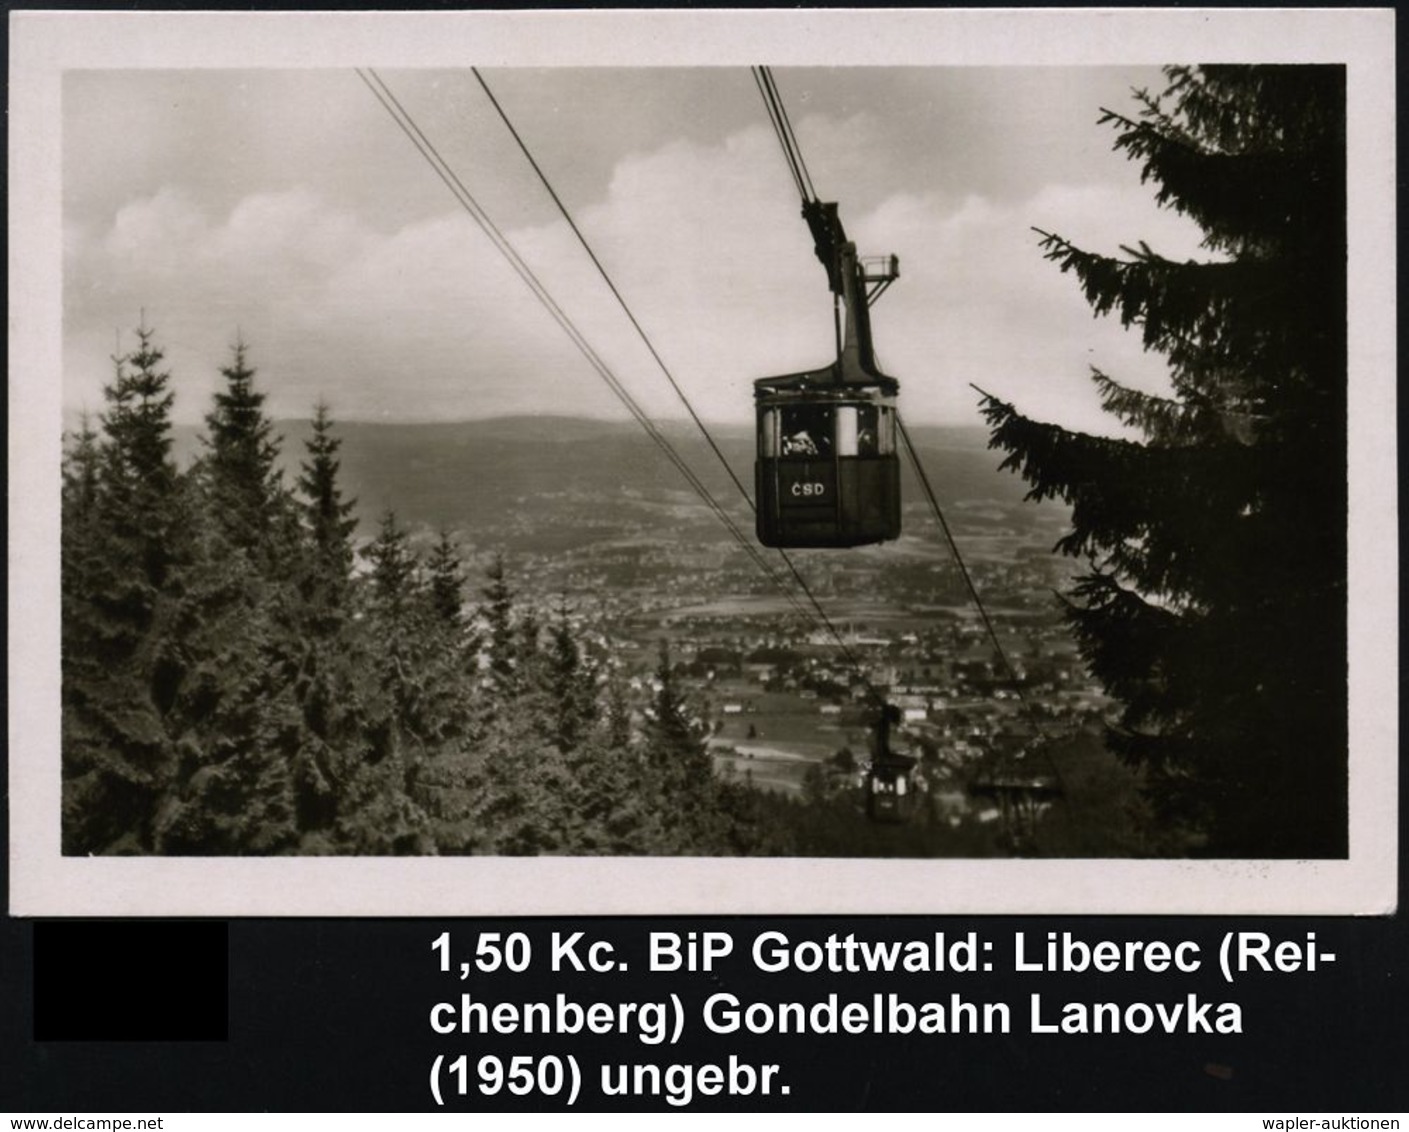 TSCHECHOSLOWAKEI 1950 1,50 Kc BiP Gottwald, Braun: Liberec, Lanovka-Seilbahn (Gondel) Ungebr. (Pofis CPH 4/07) - Greivög - Eisenbahnen